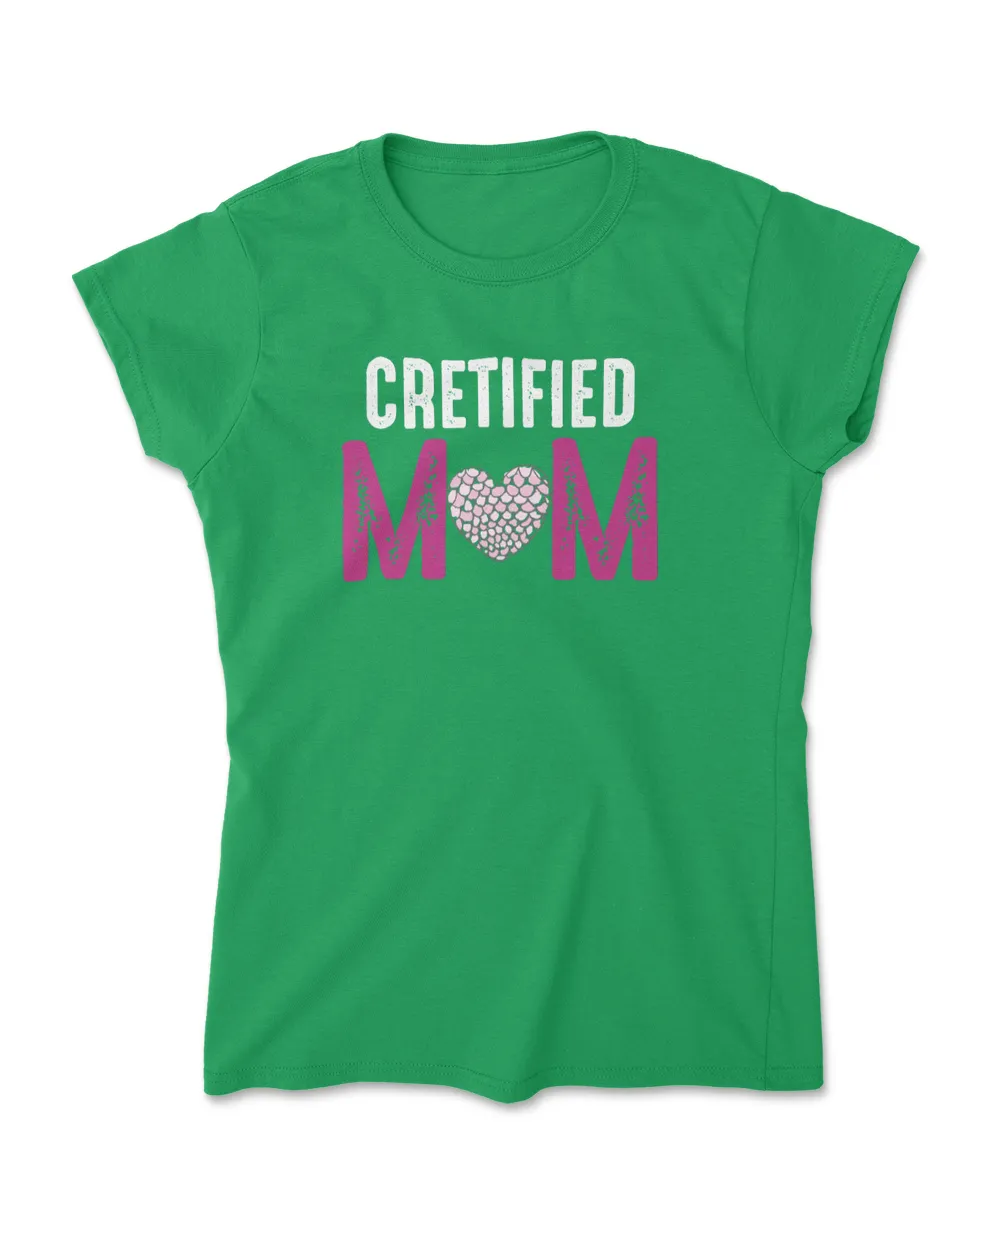 Certified mom t shirt